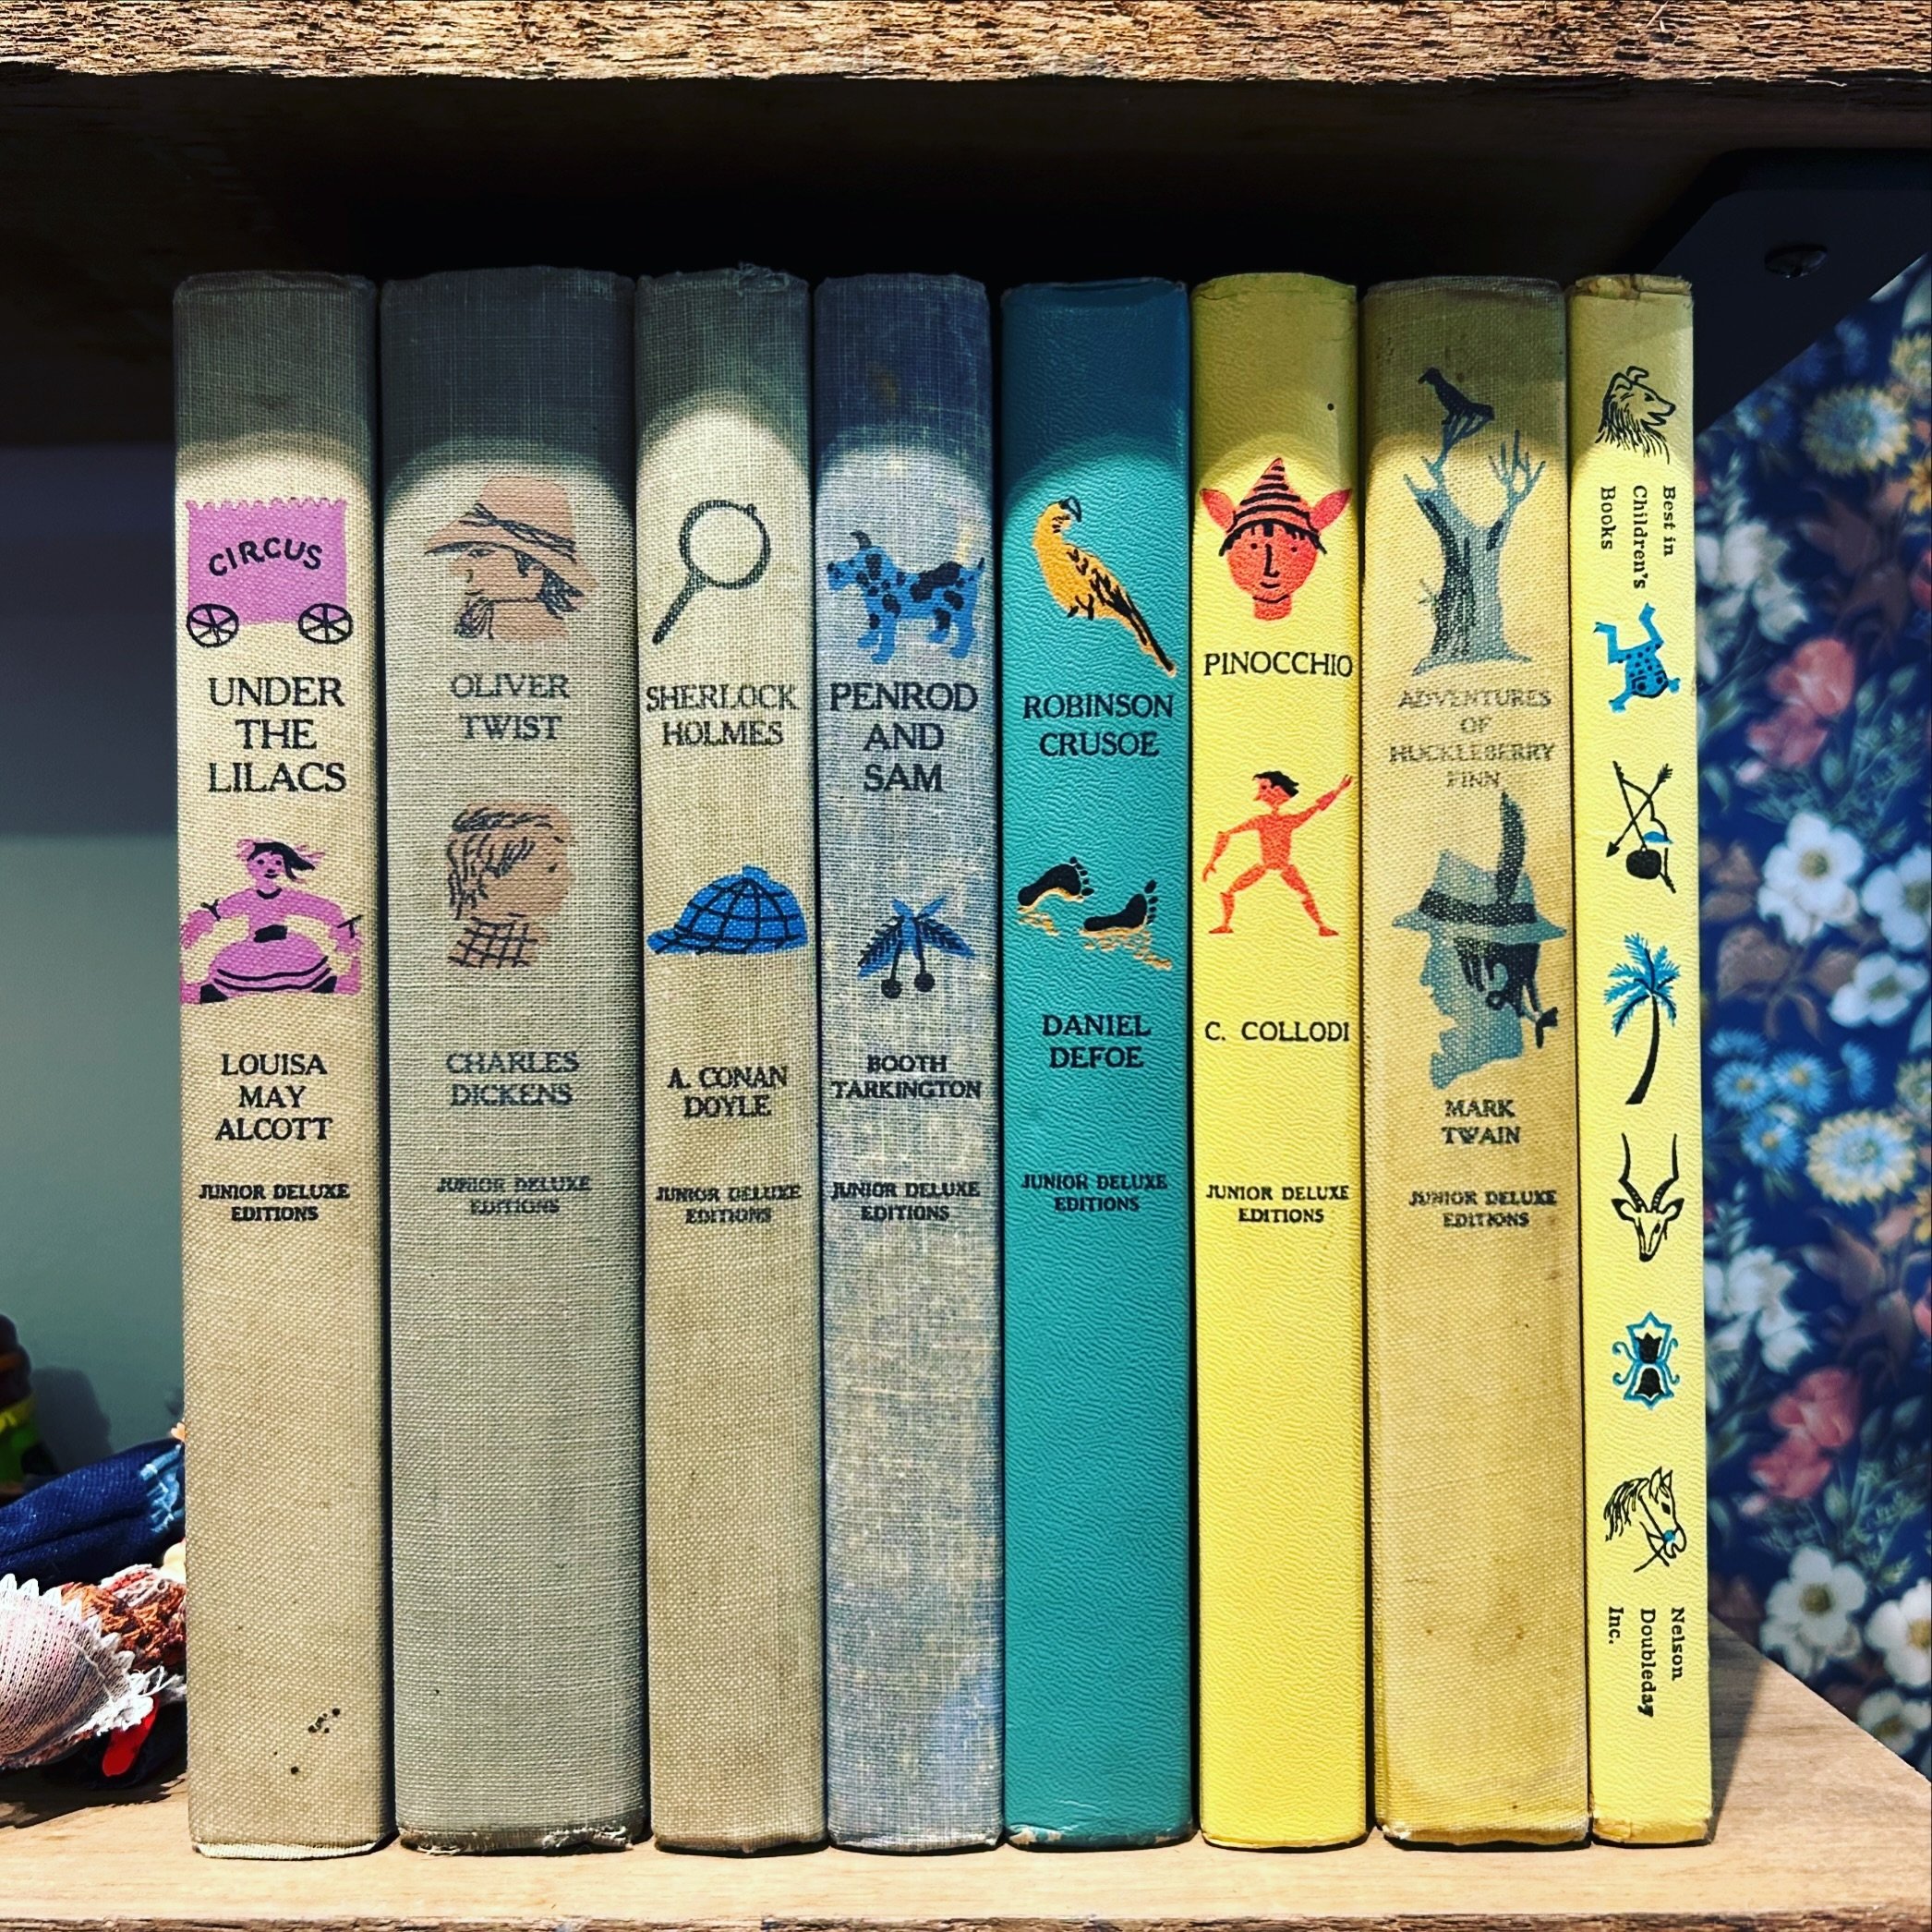 Mid-century junior deluxe editions of Sherlock Holmes, Pinocchio, Oliver Twist &amp; more. 📚 Come explore our book section! 

#vintage #vintagebooks #vintageshop #kids #kidsbooks #kidsvintagebooks